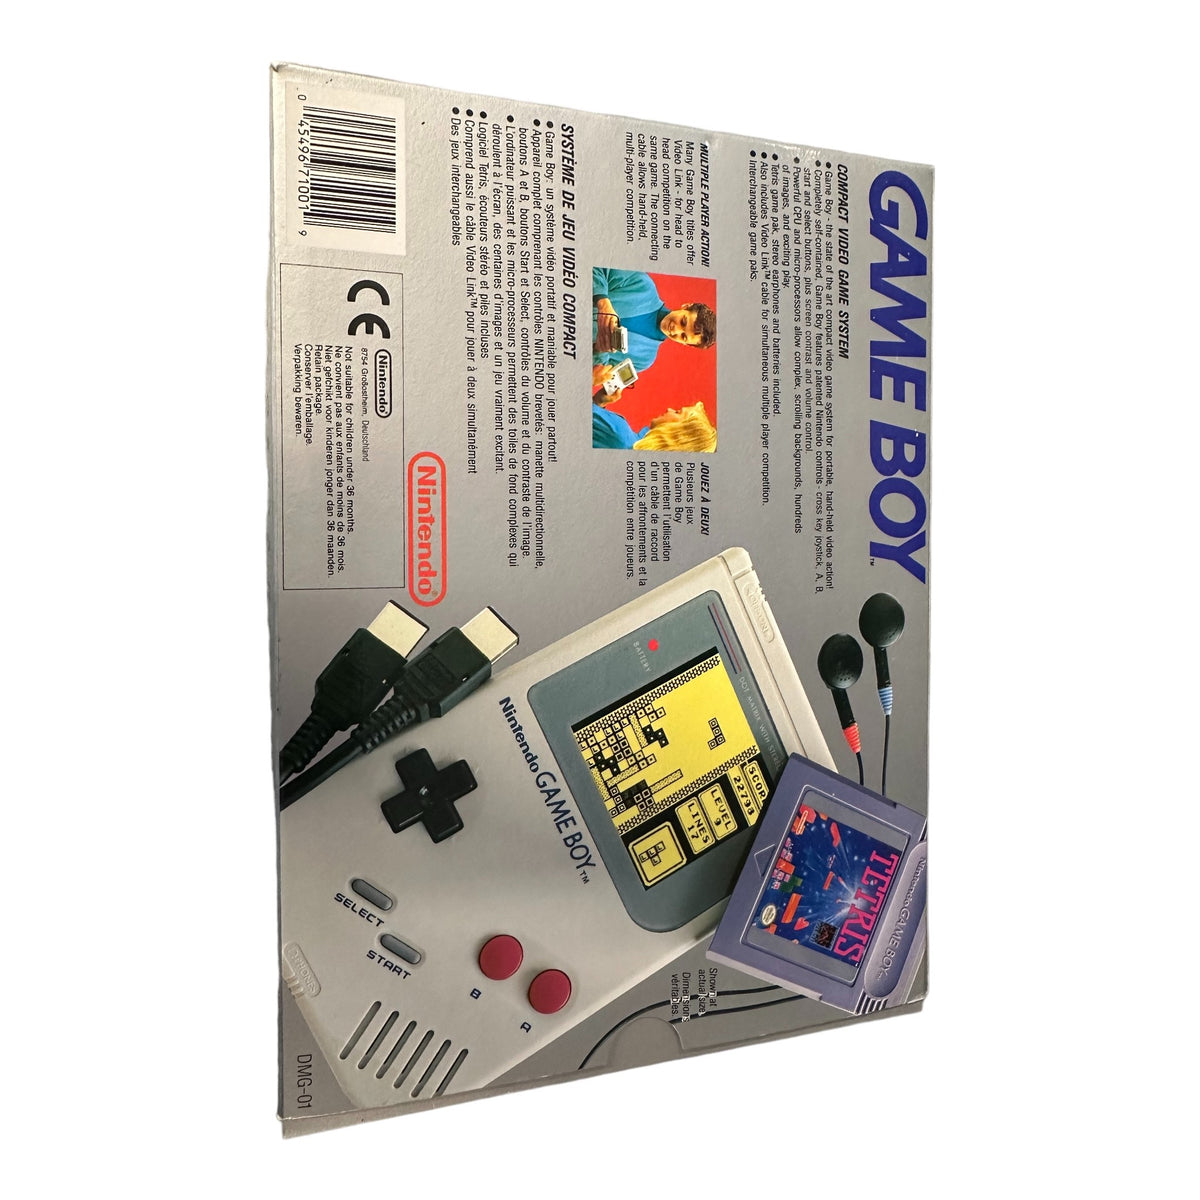 Gameboy Classic Tetris Pak - boxed Gamesellers.nl